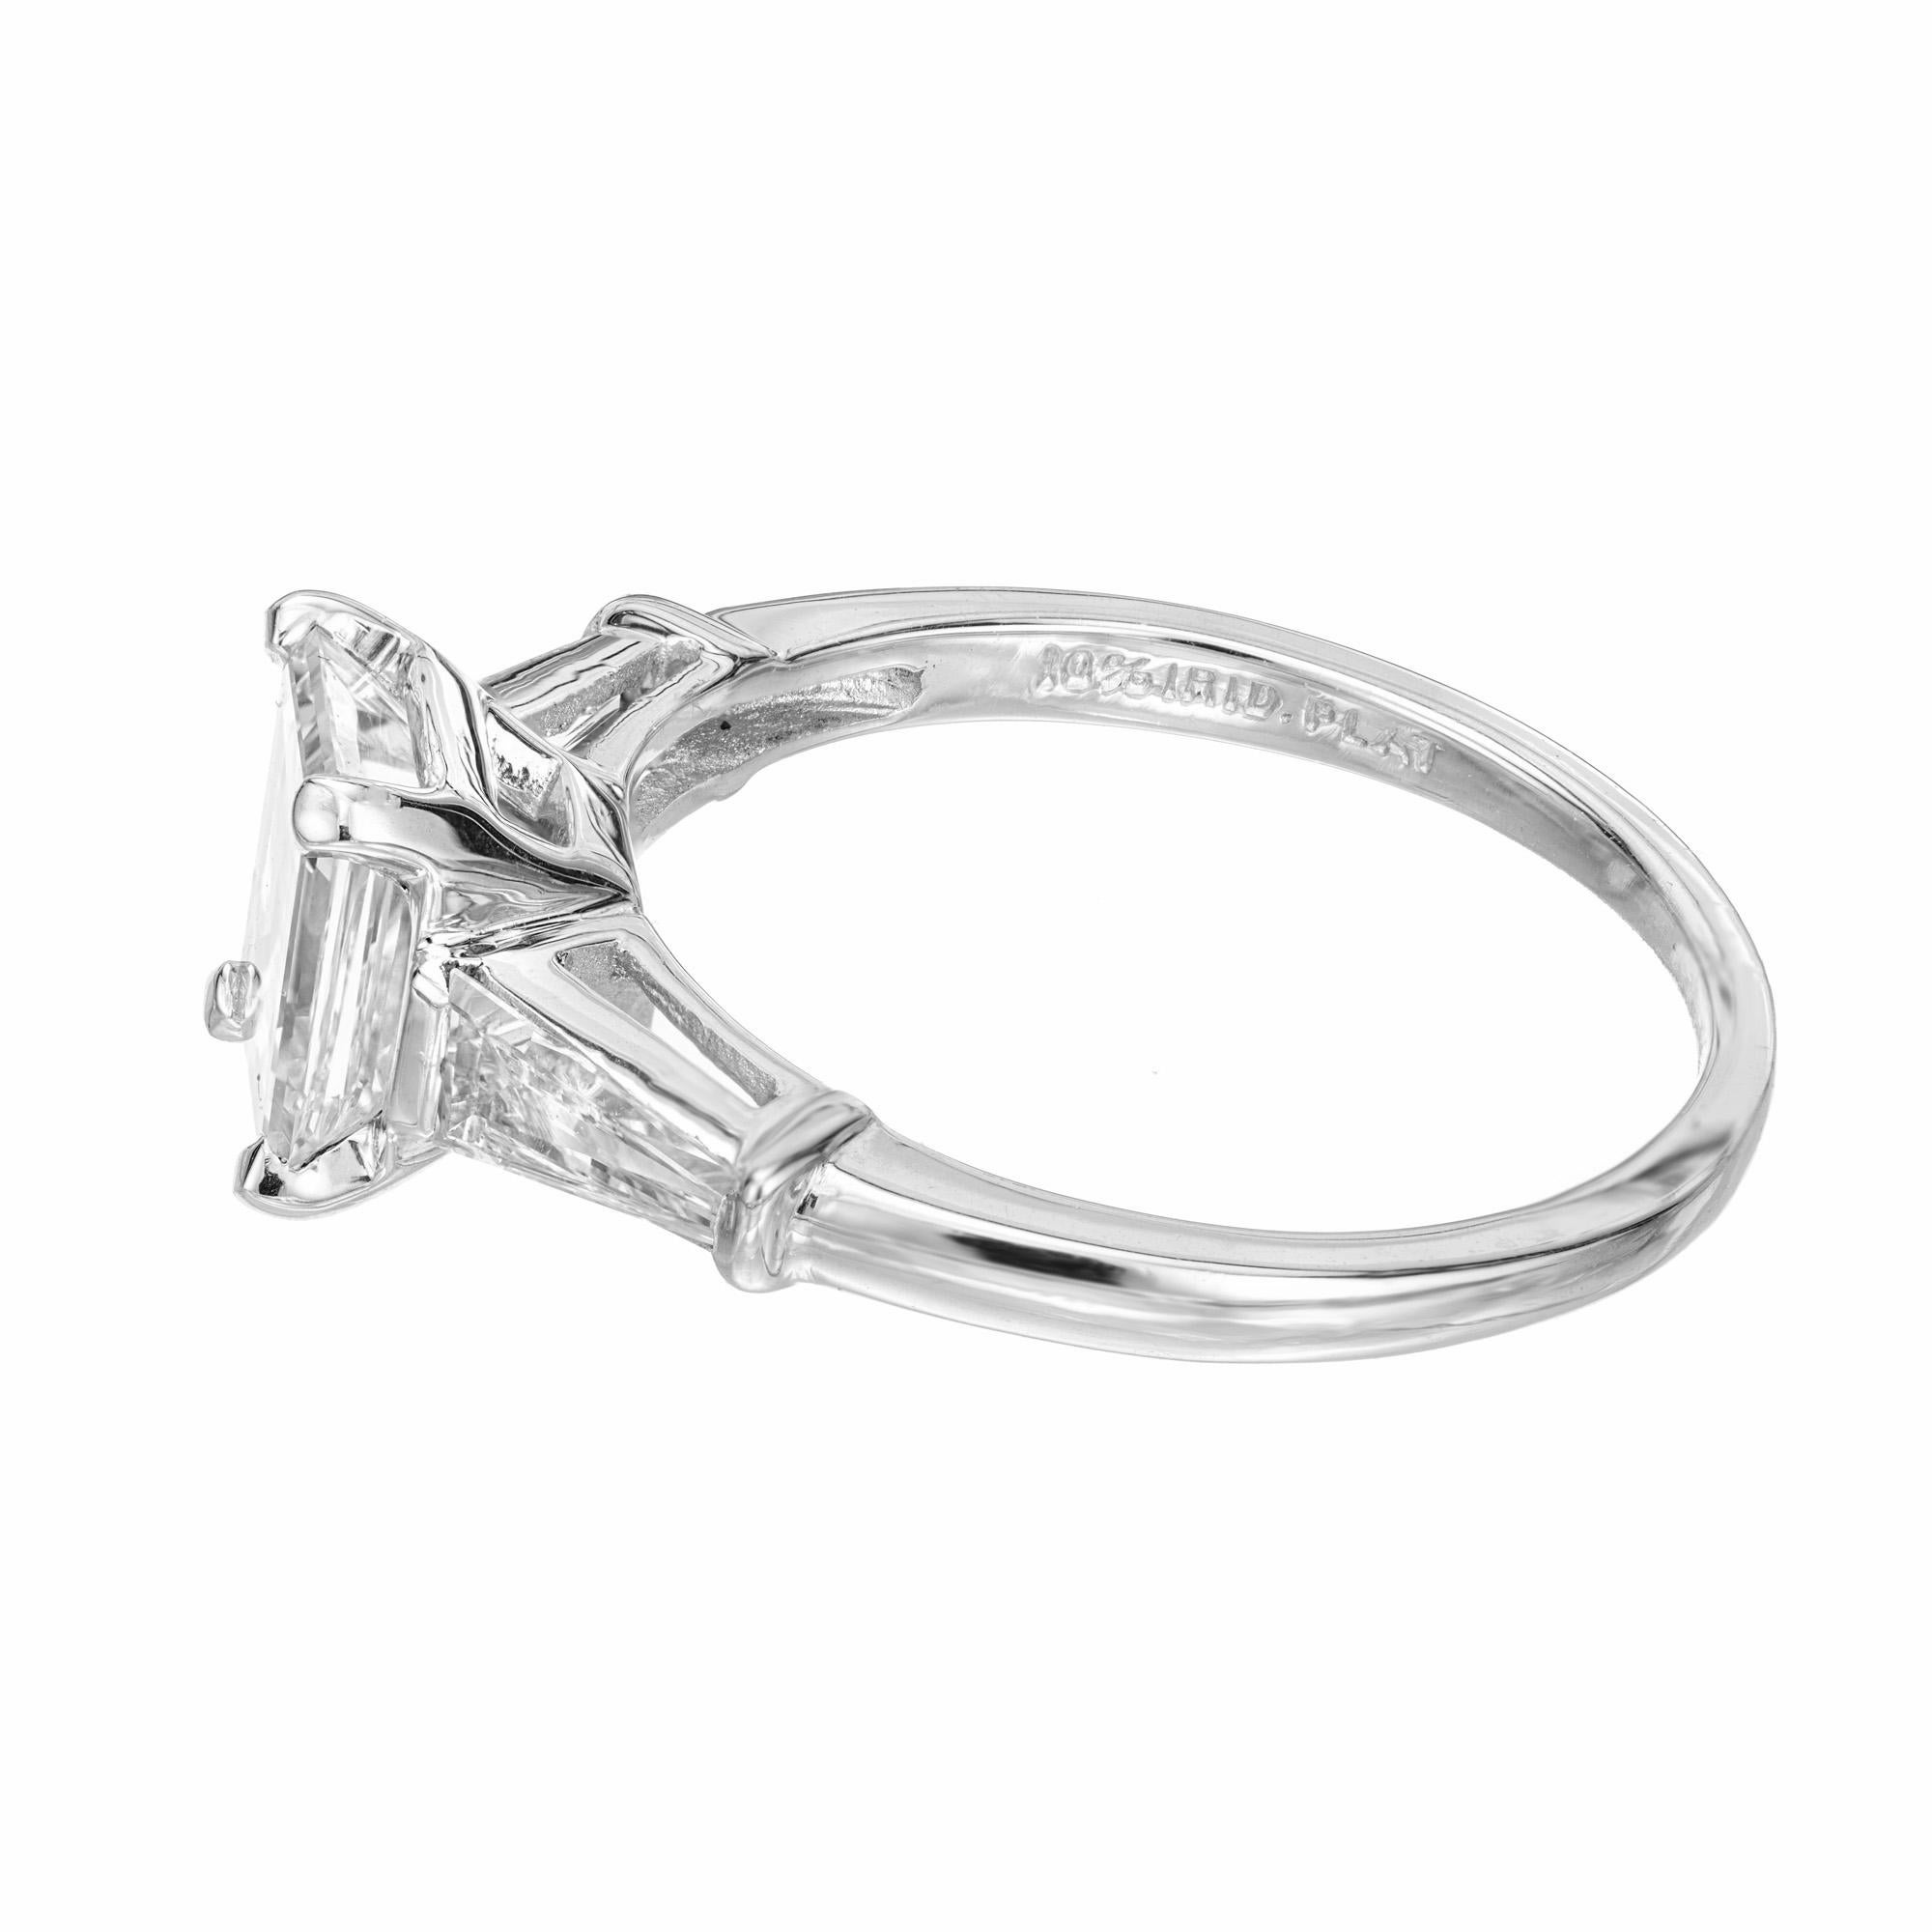 Peter Suchy GIA 1.51 Carat Emerald Cut Diamond Platinum Engagement Ring For Sale 1